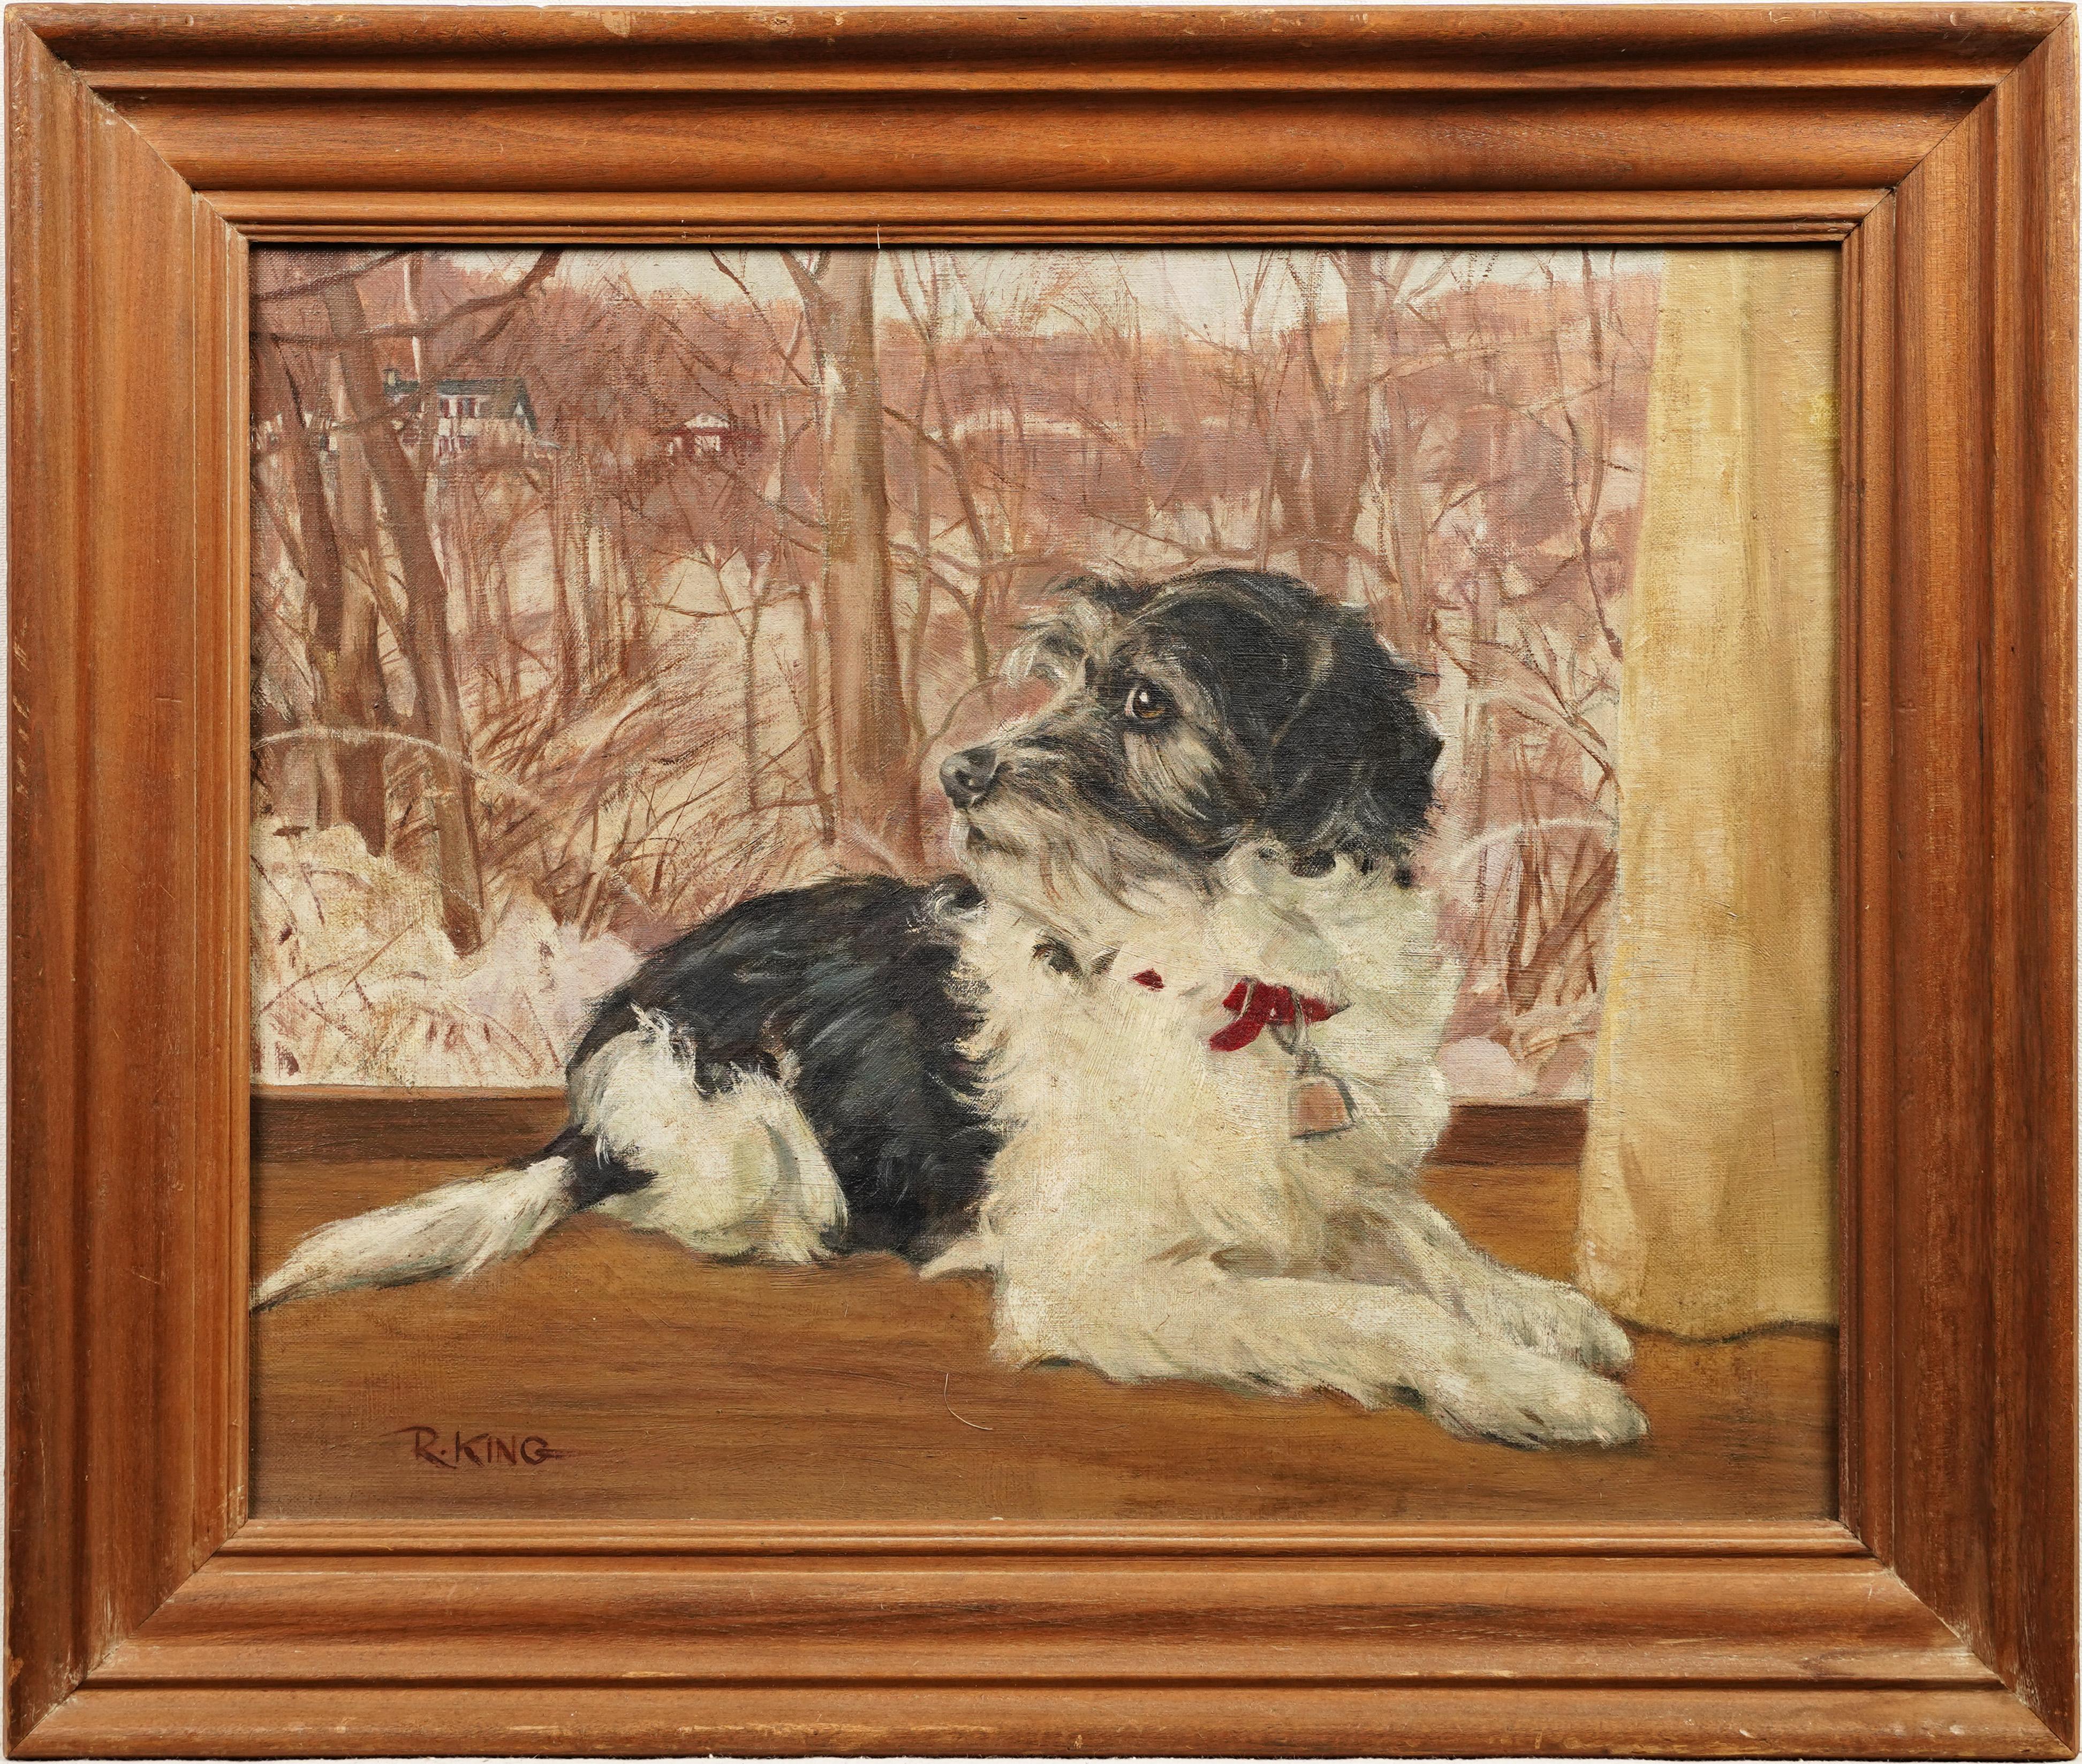 Antique American impressionist signed dog portrait oil painting.  Oil on canvas.  Signed.  Framed.  Image size, 20L x 16H.